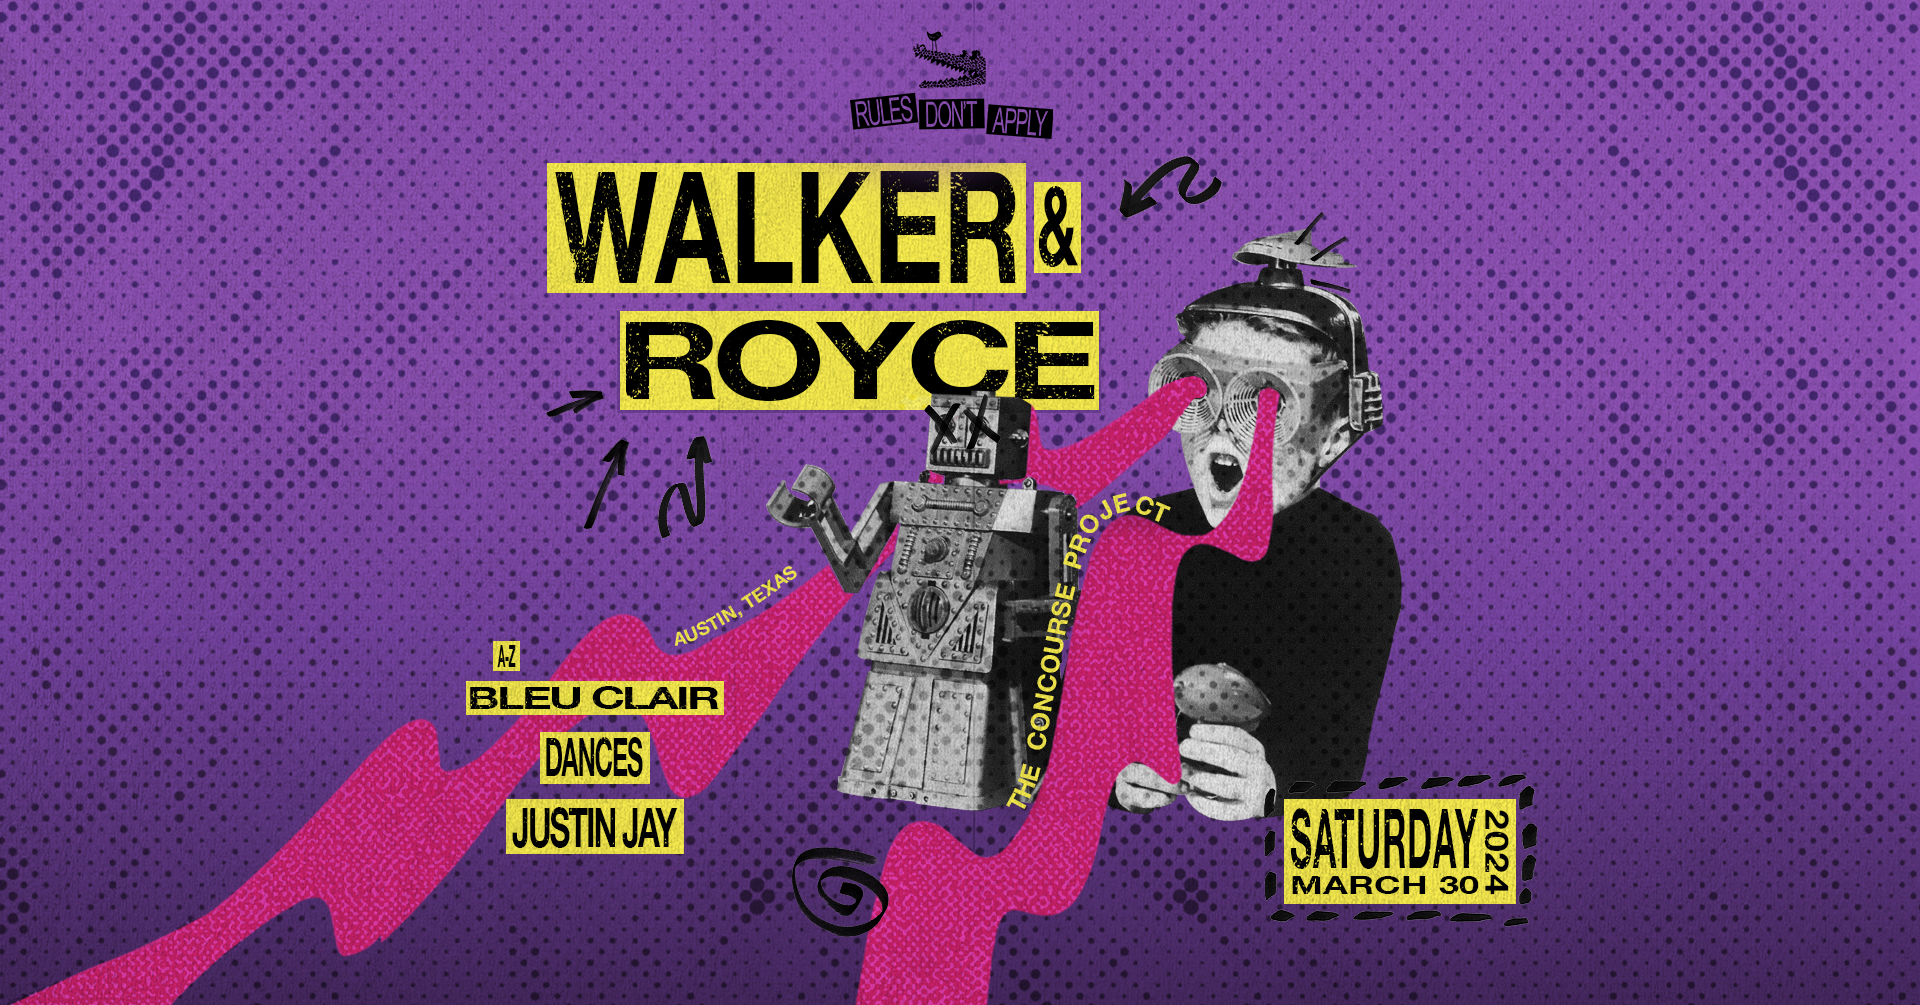 Rules Don't Apply: Walker & Royce, Justin Jay, Bleu Clair - フライヤー表